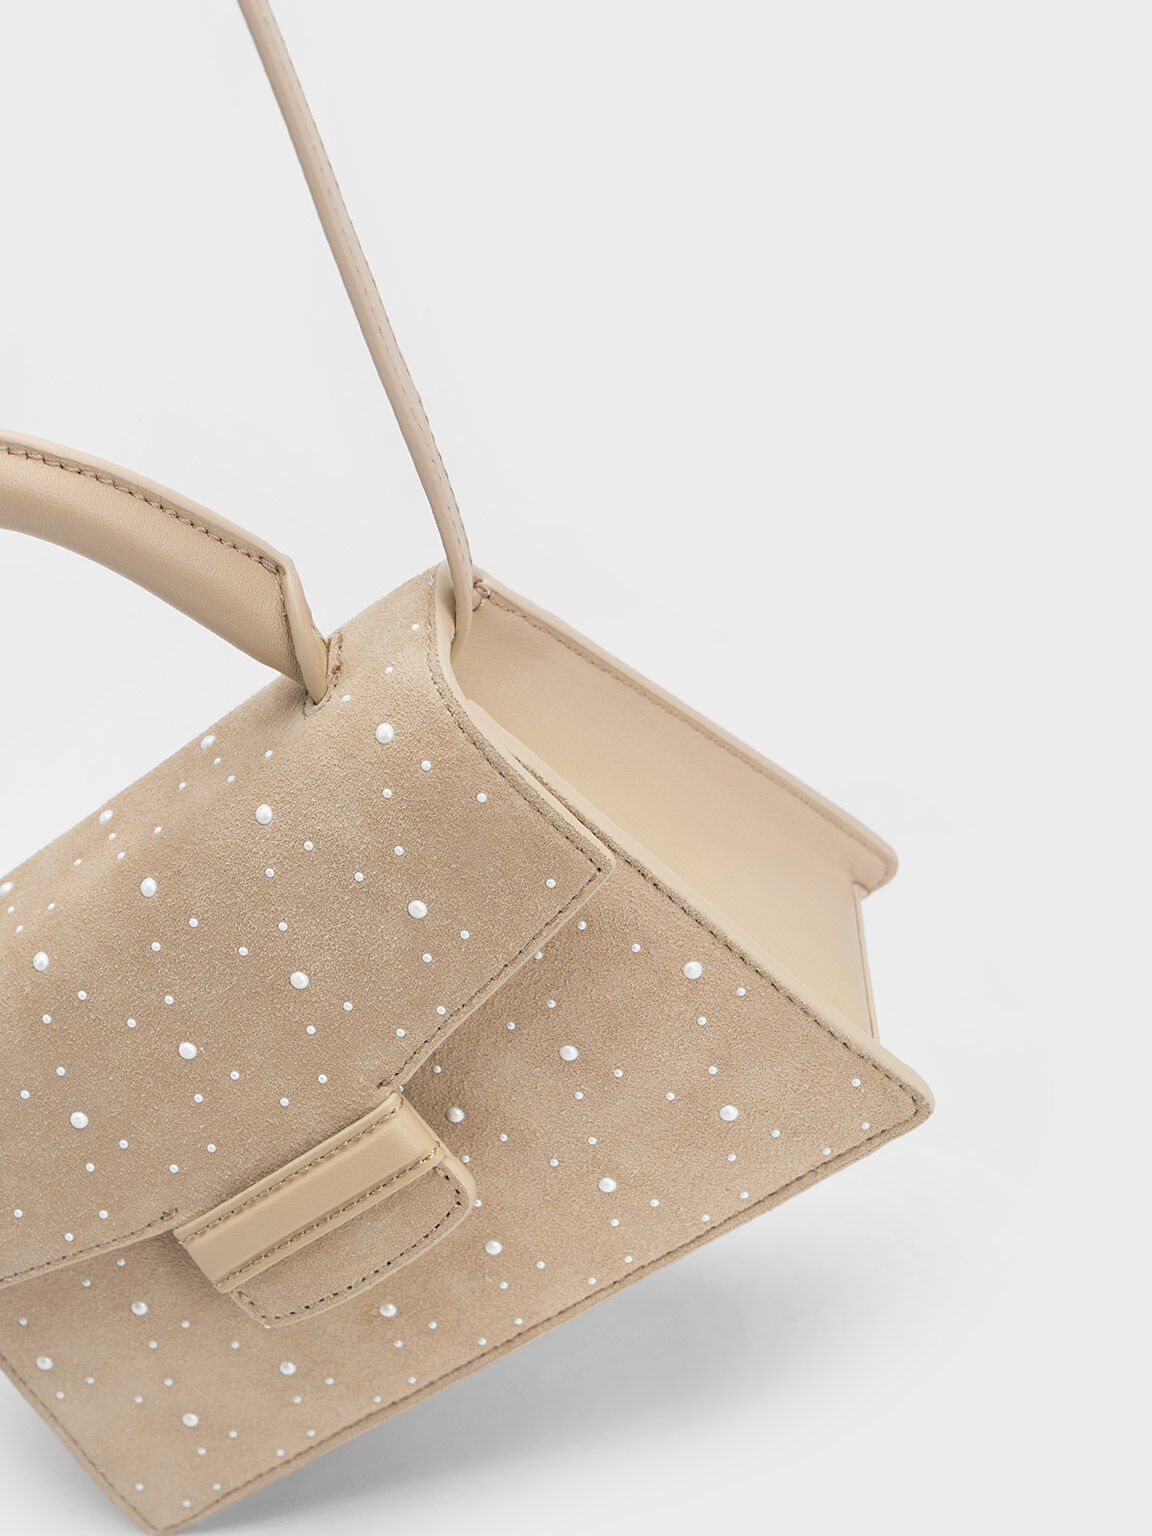 Bead & Crystal-Embellished Top Handle Bag, Nude, hi-res